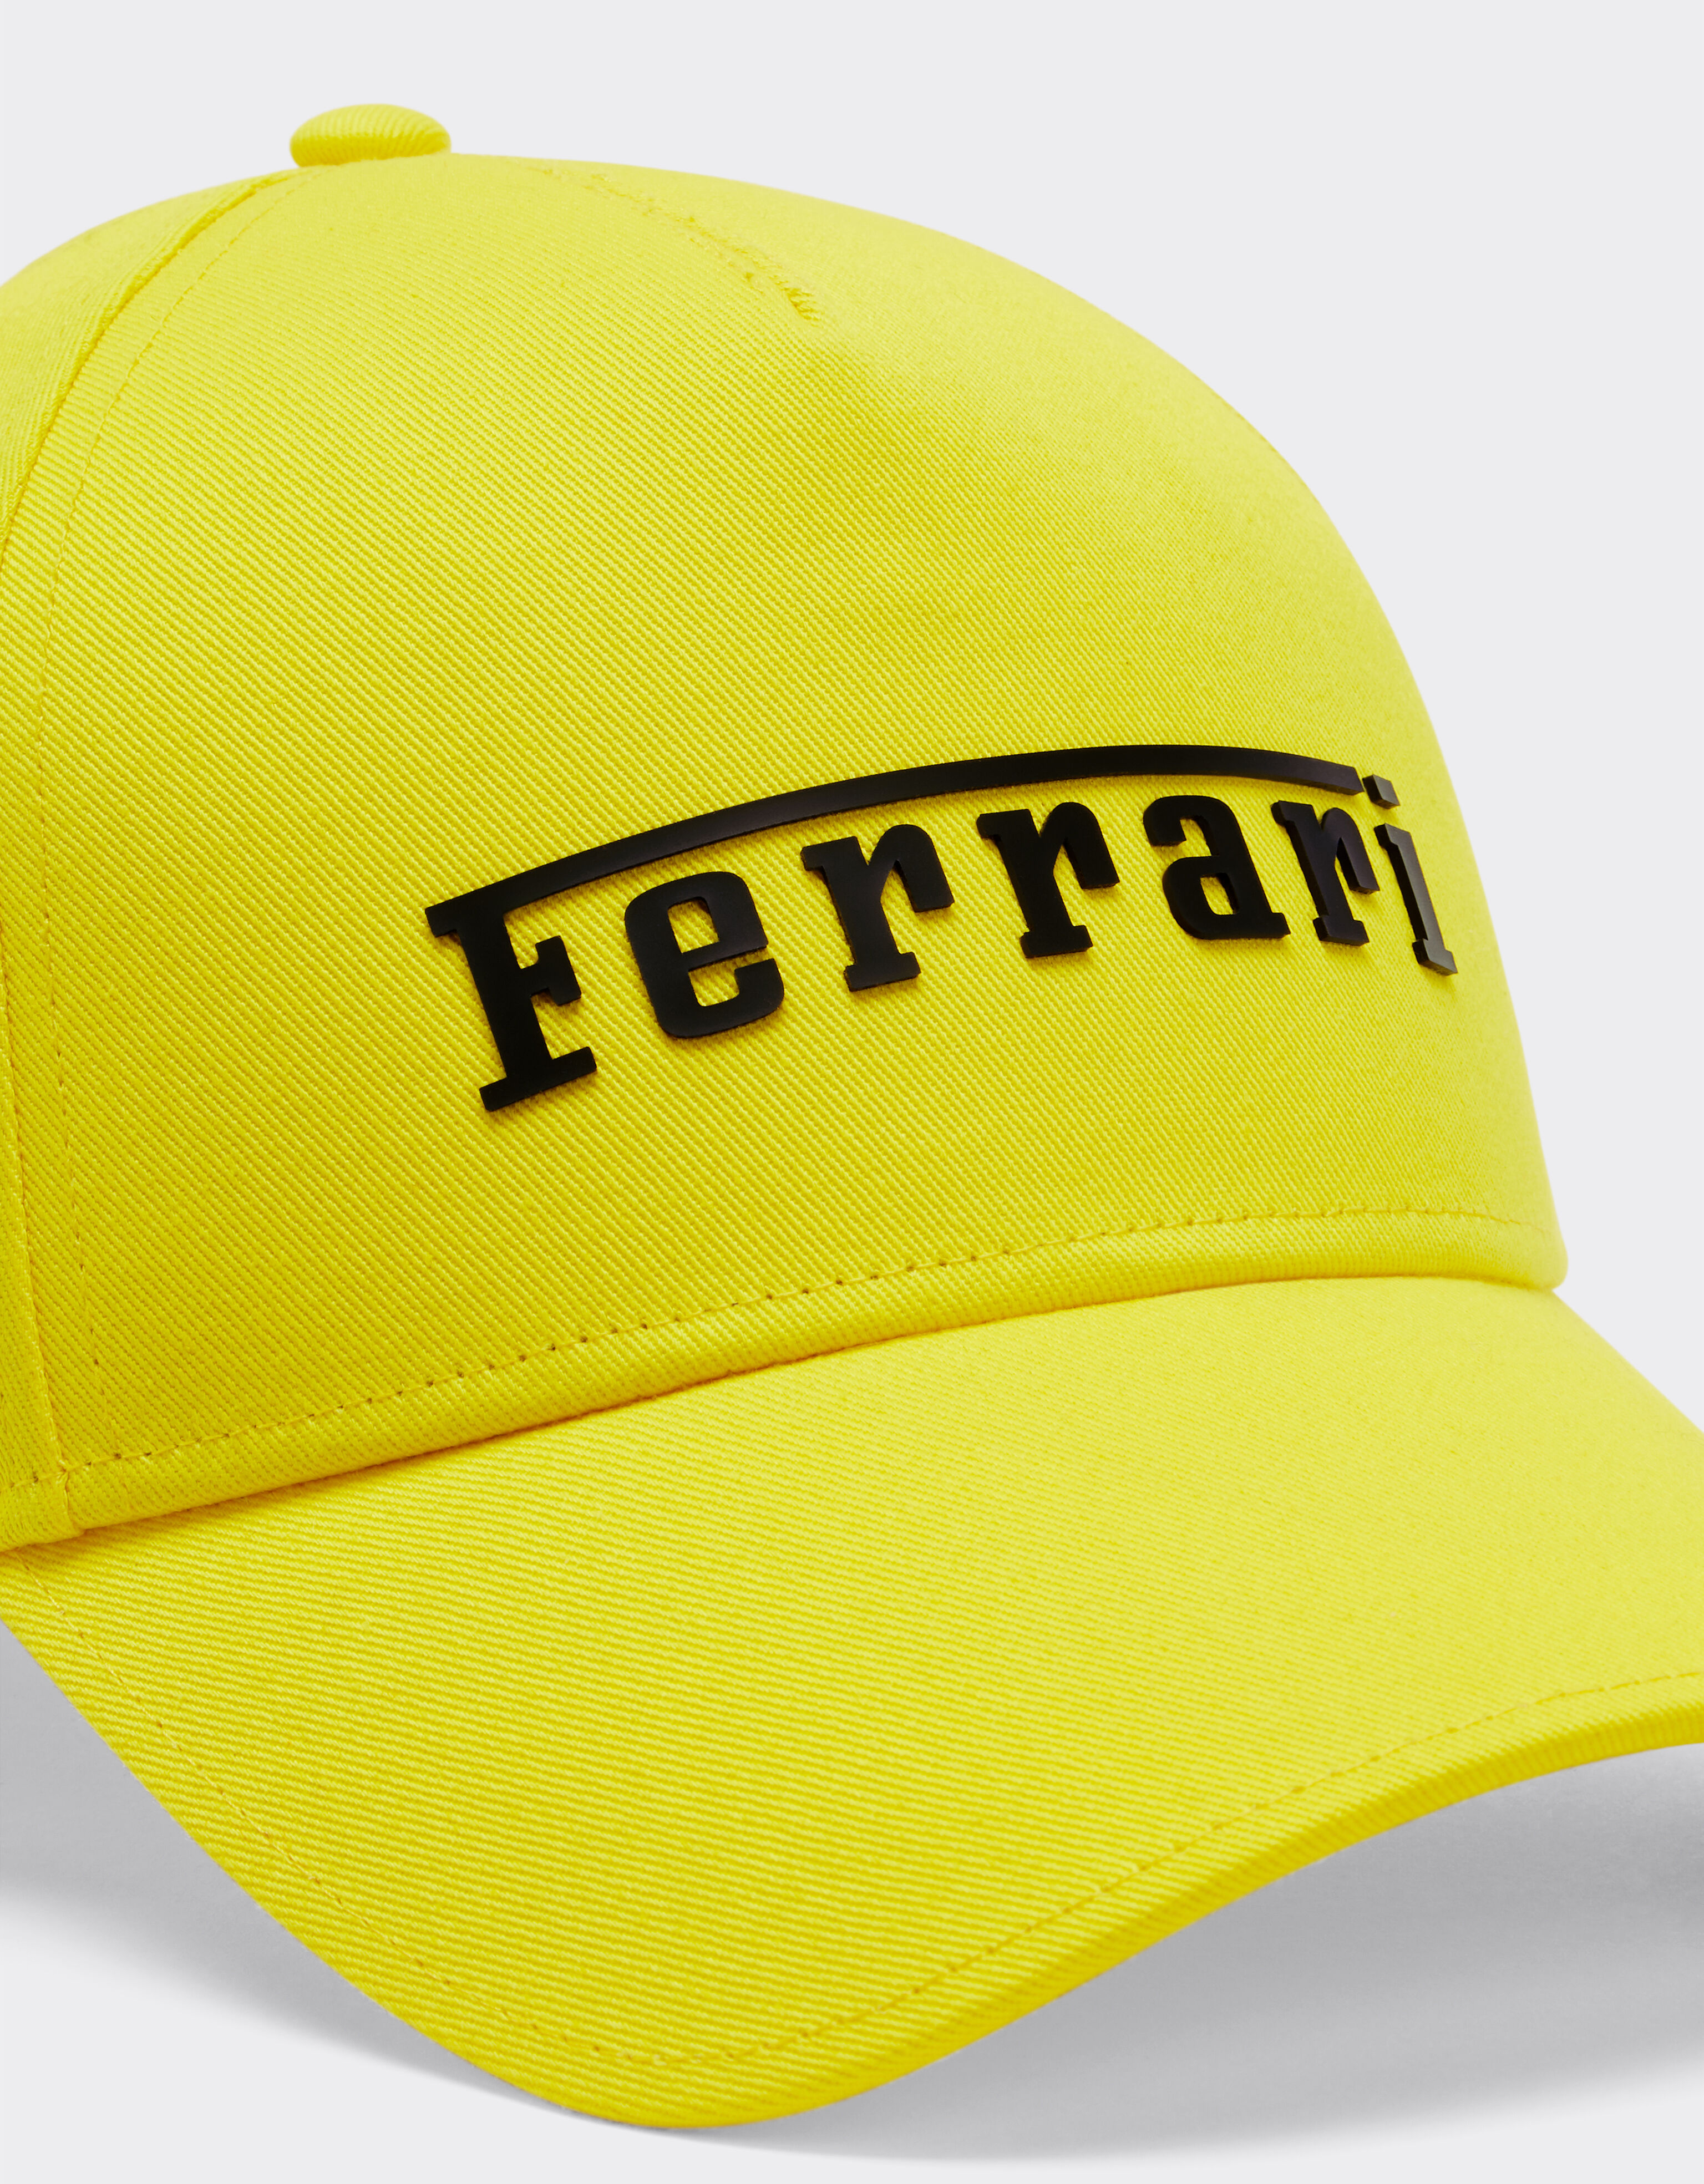 Baseball hat with rubberised logo